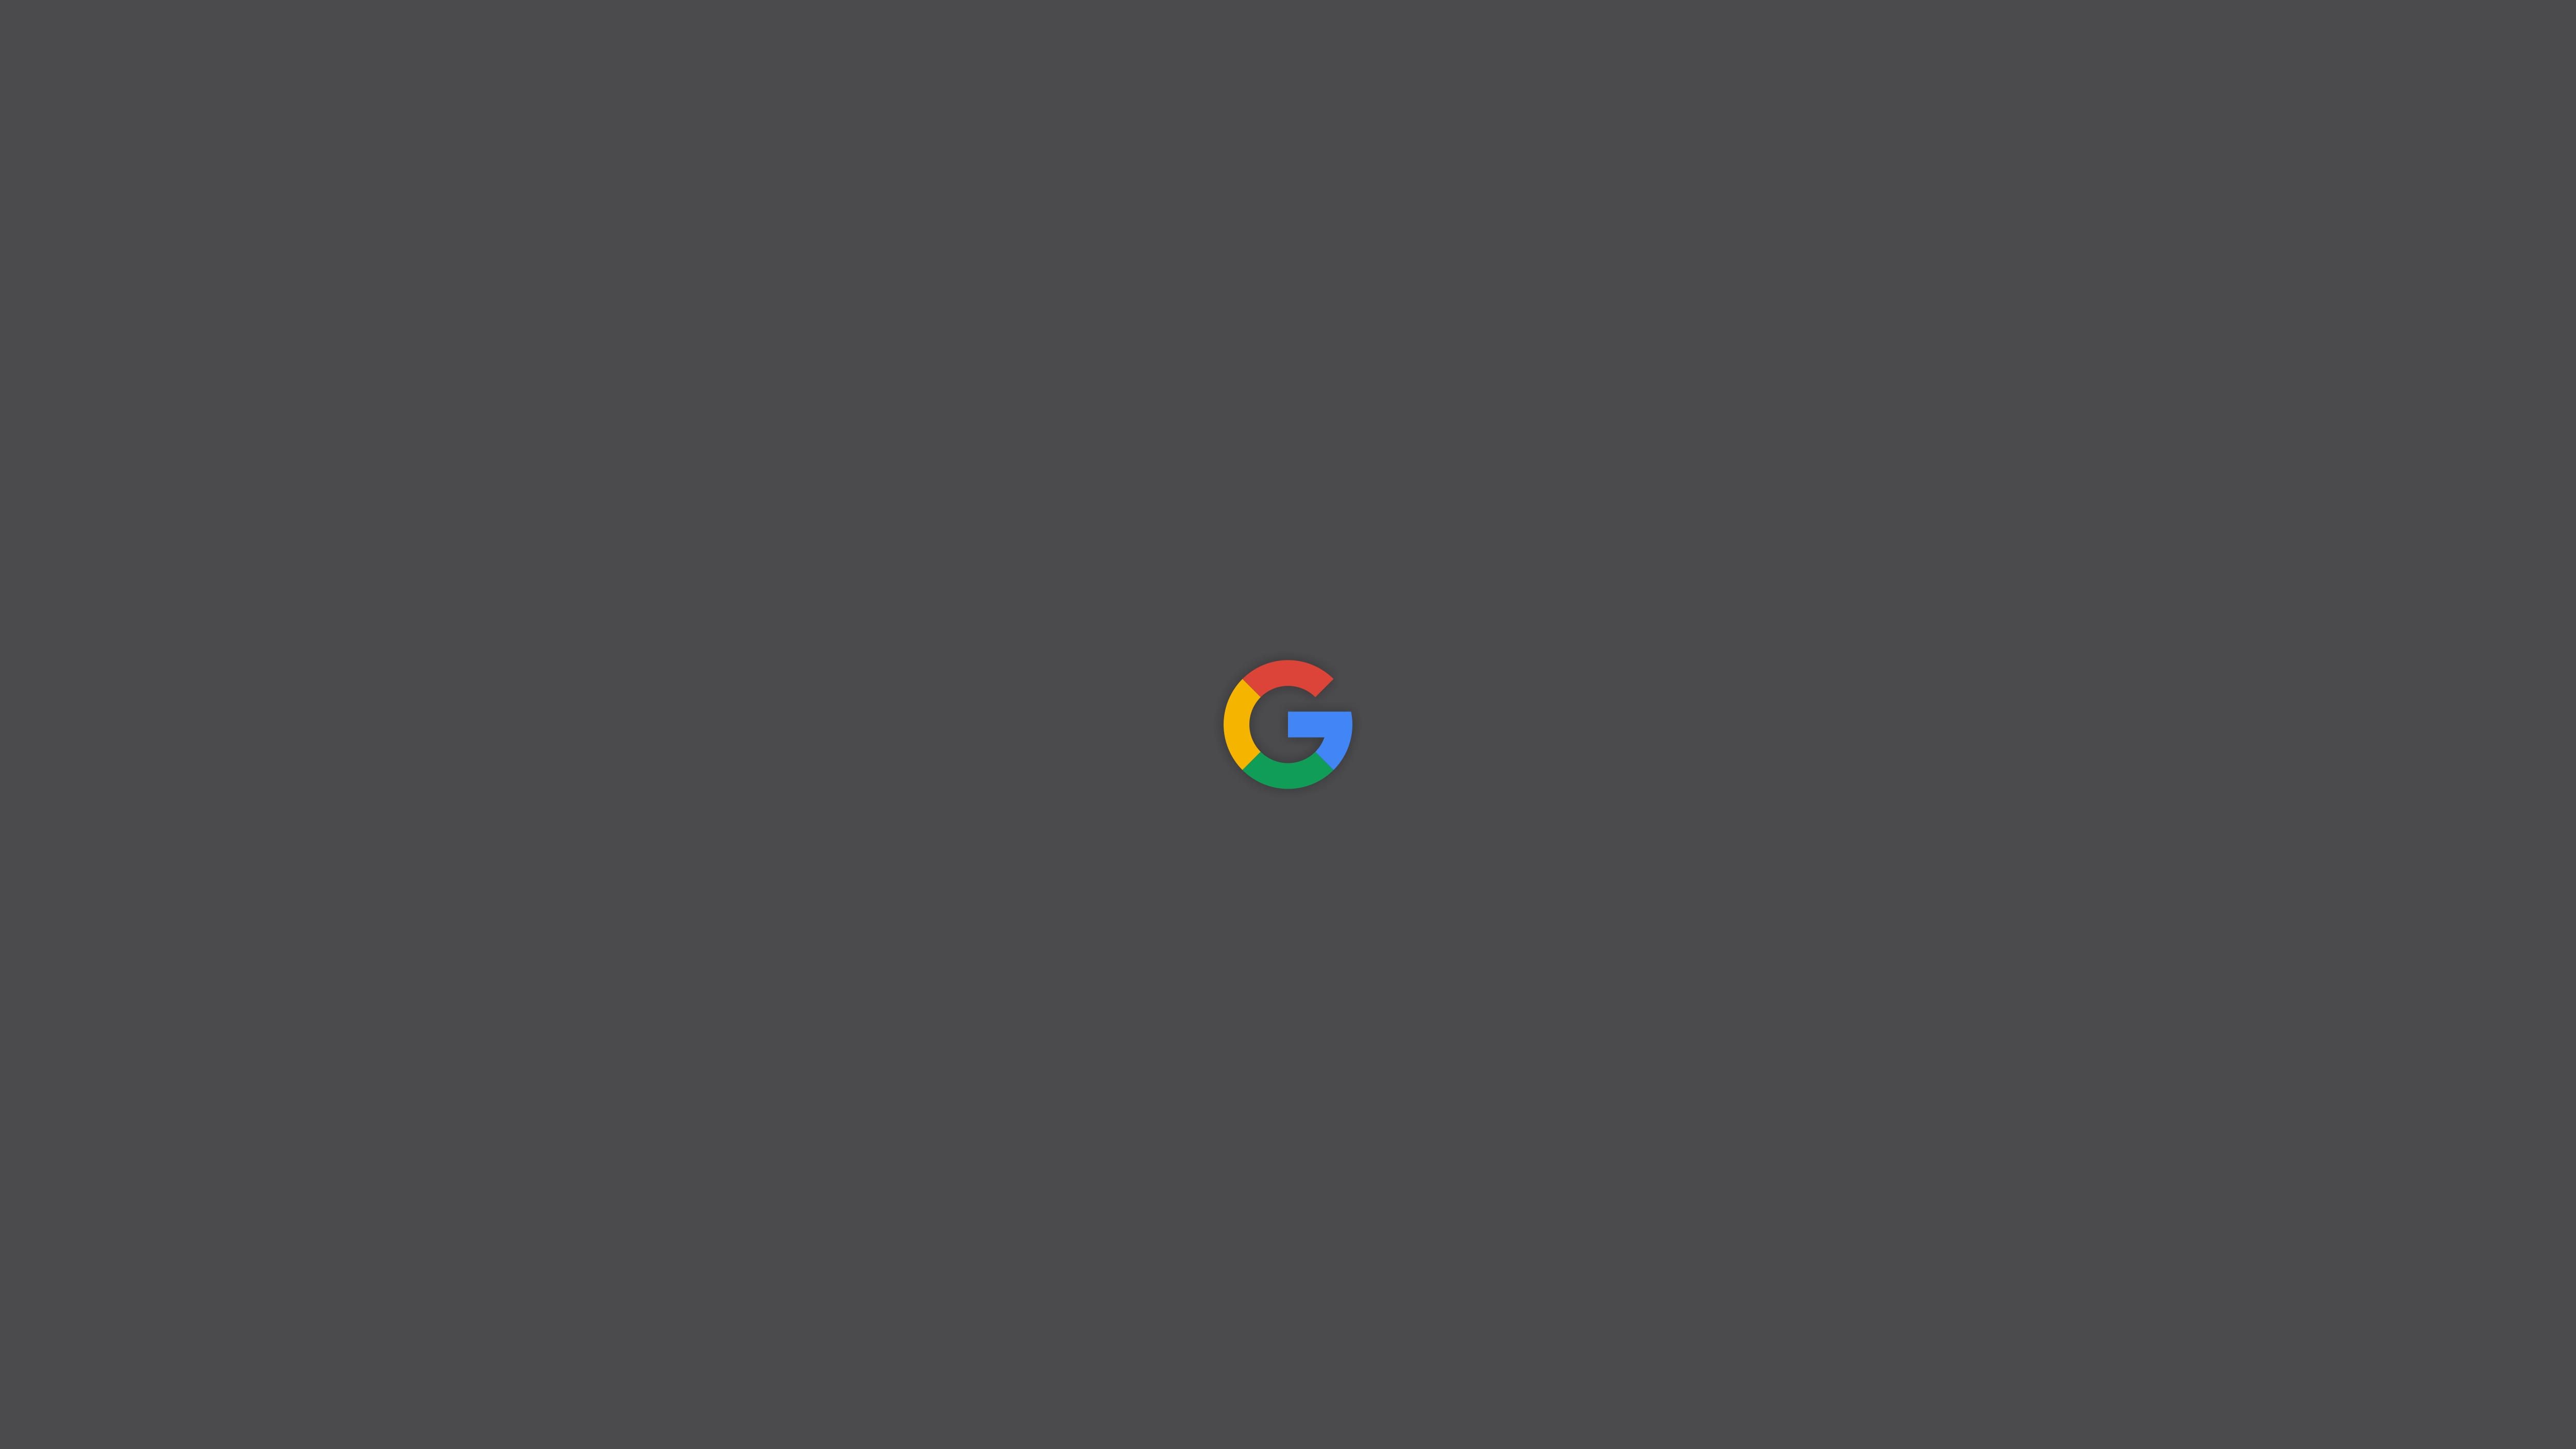 Google Wallpaper 4k Ultra HD Background Image